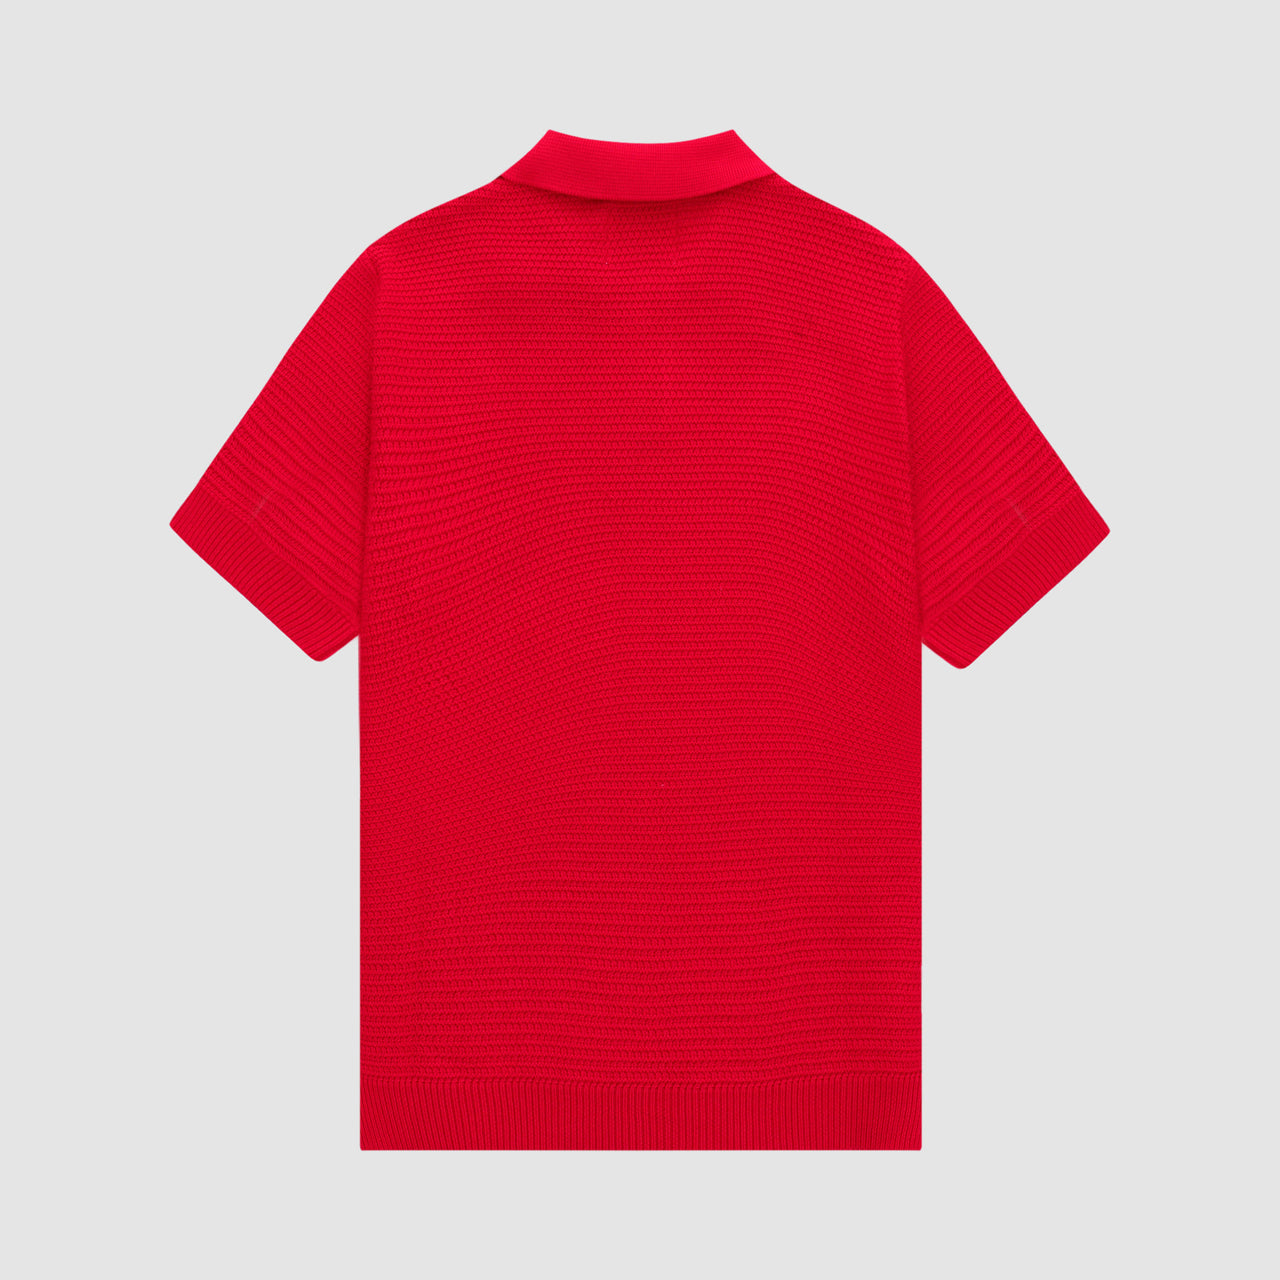 Simon Knit Shirt - Red